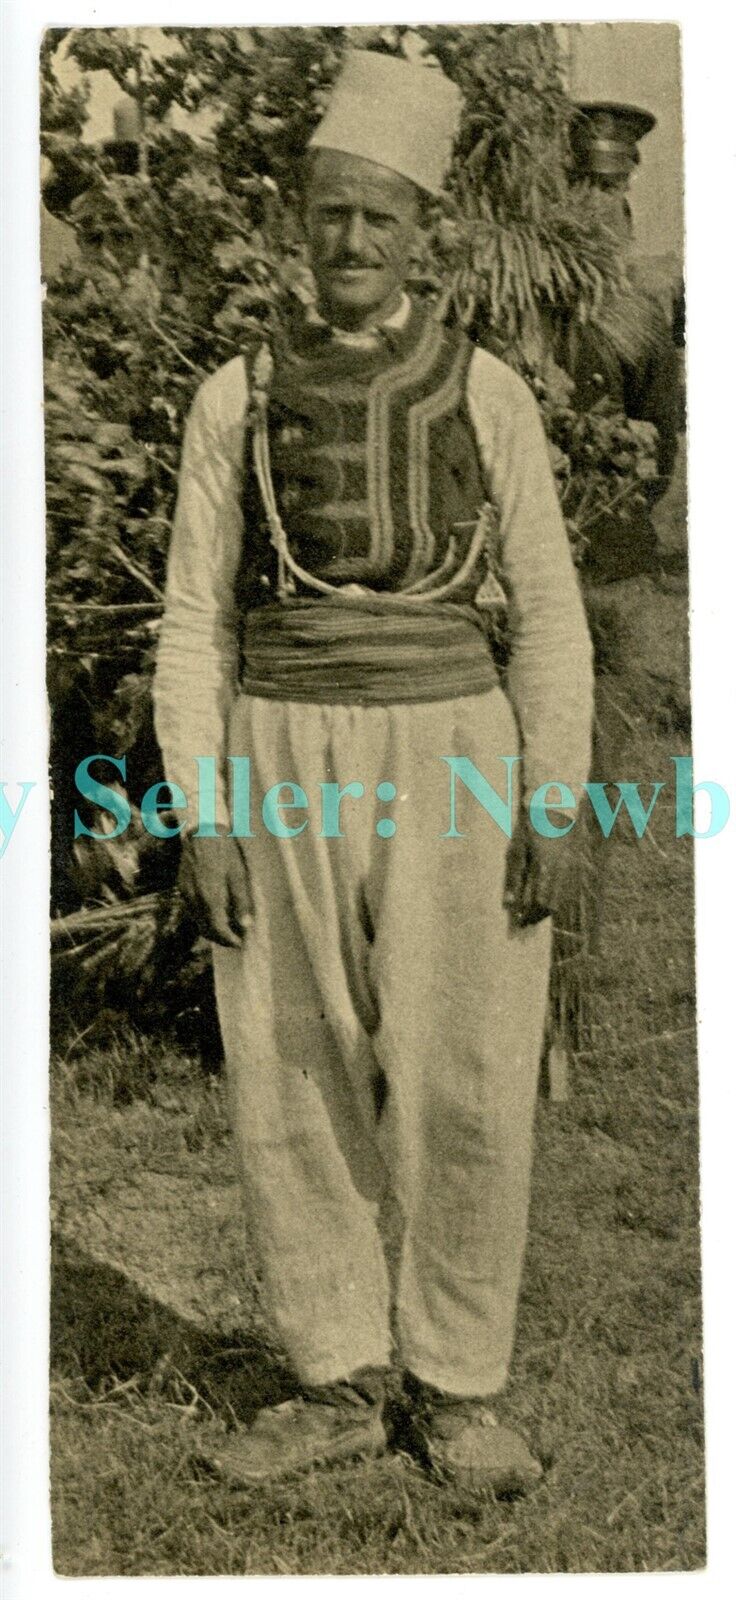 Albania - ALBANIAN MAN IN NATIVE DRESS - c1910 Vintage Photograph